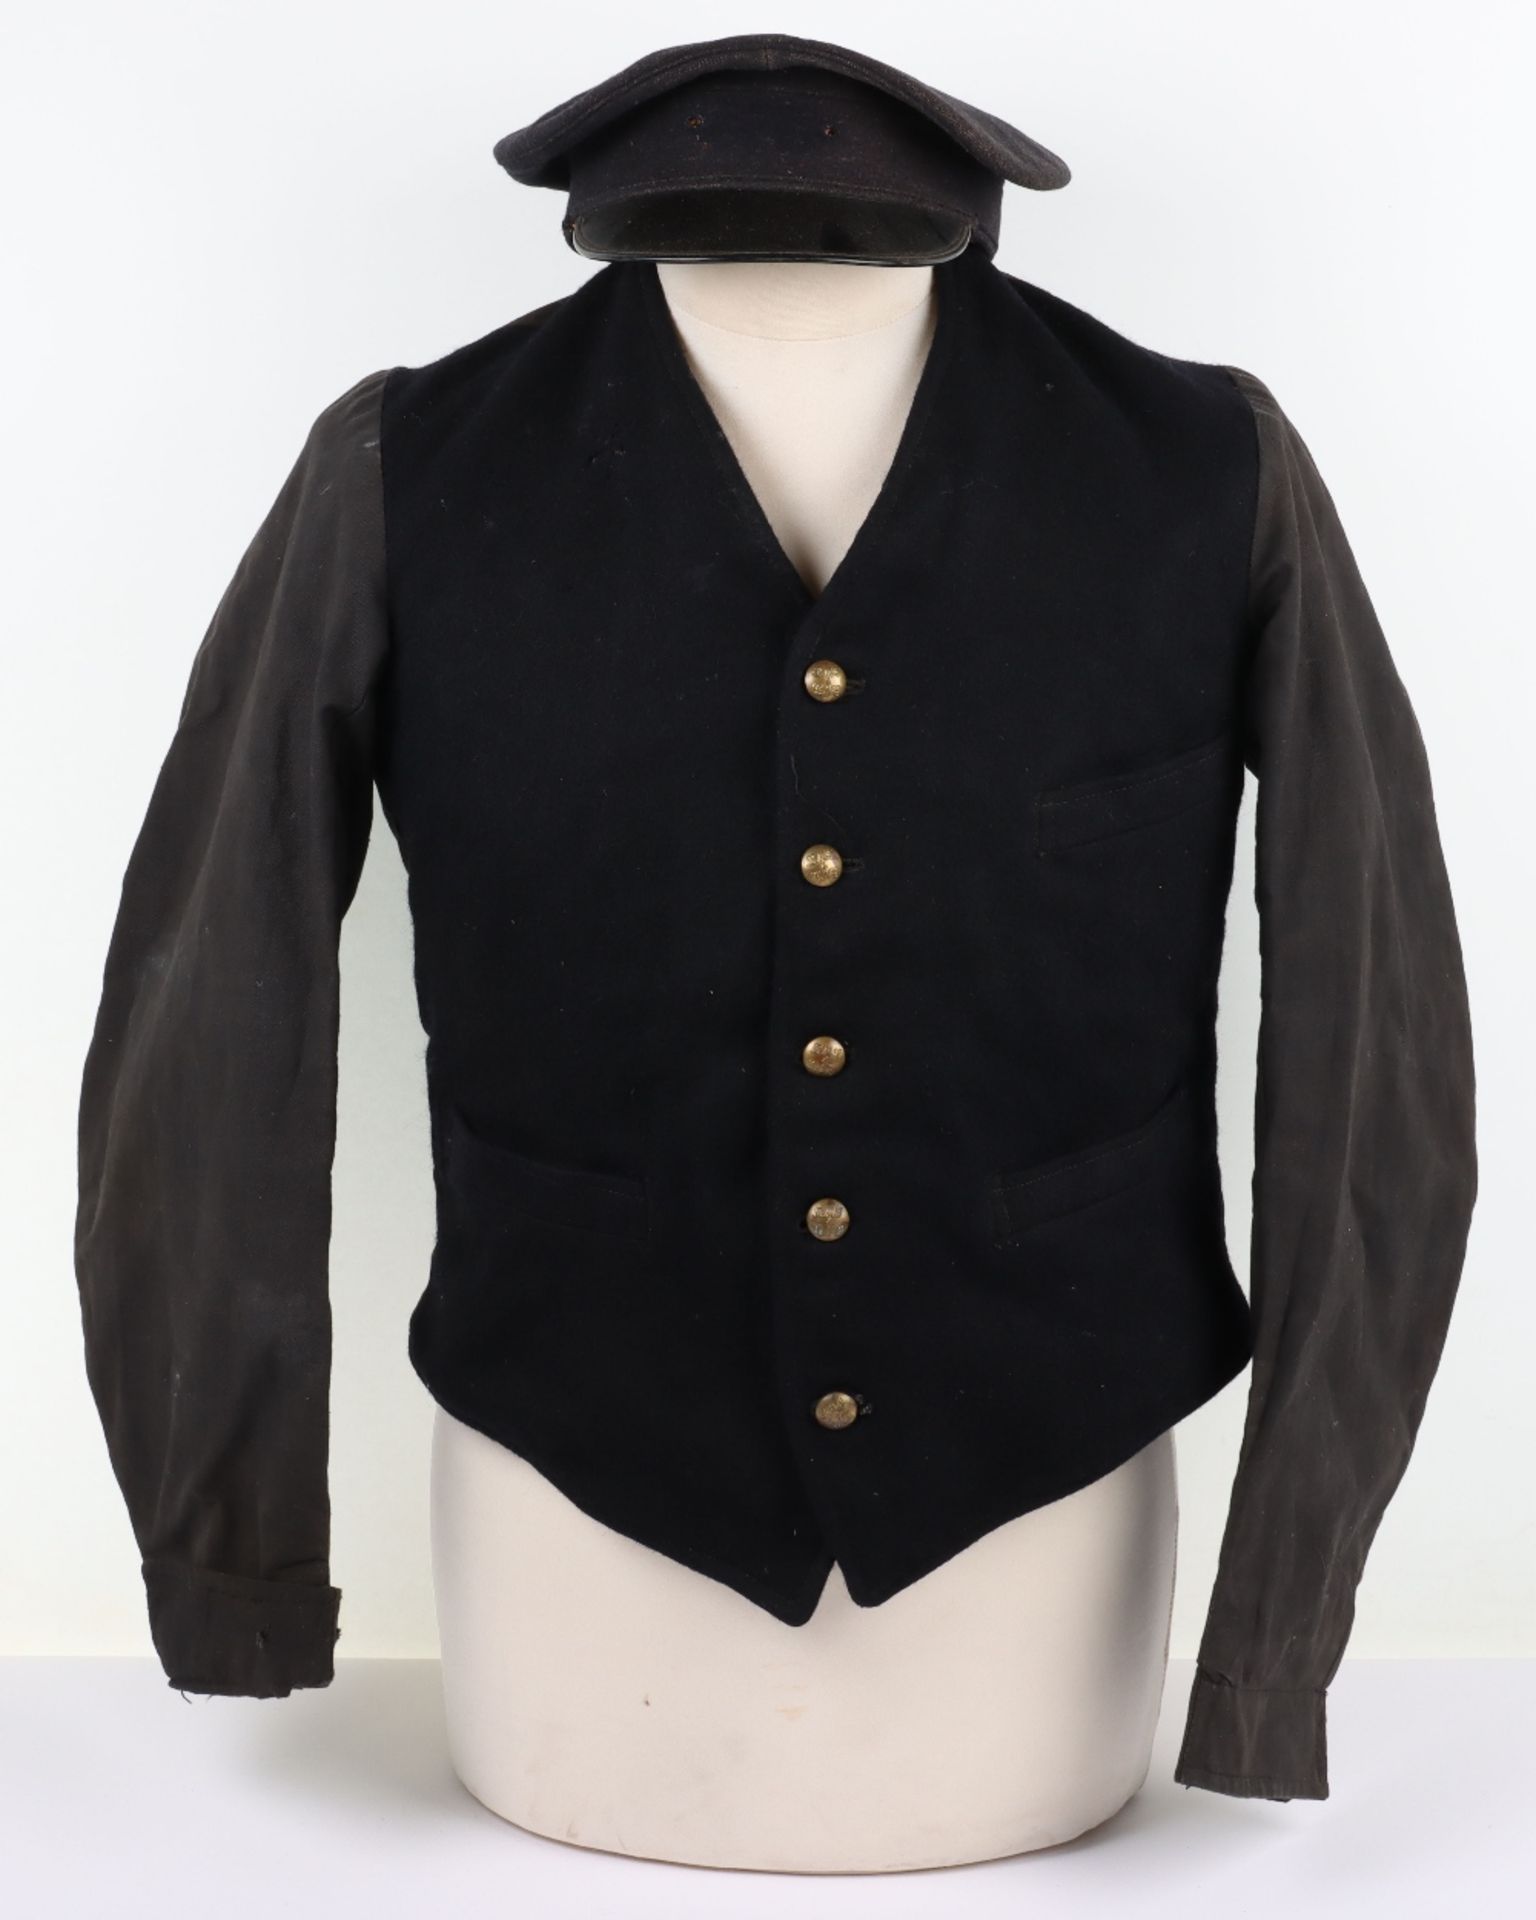 A London, Midland & Scottish and London North Eastern Railway porter’s jacket, circa 1930